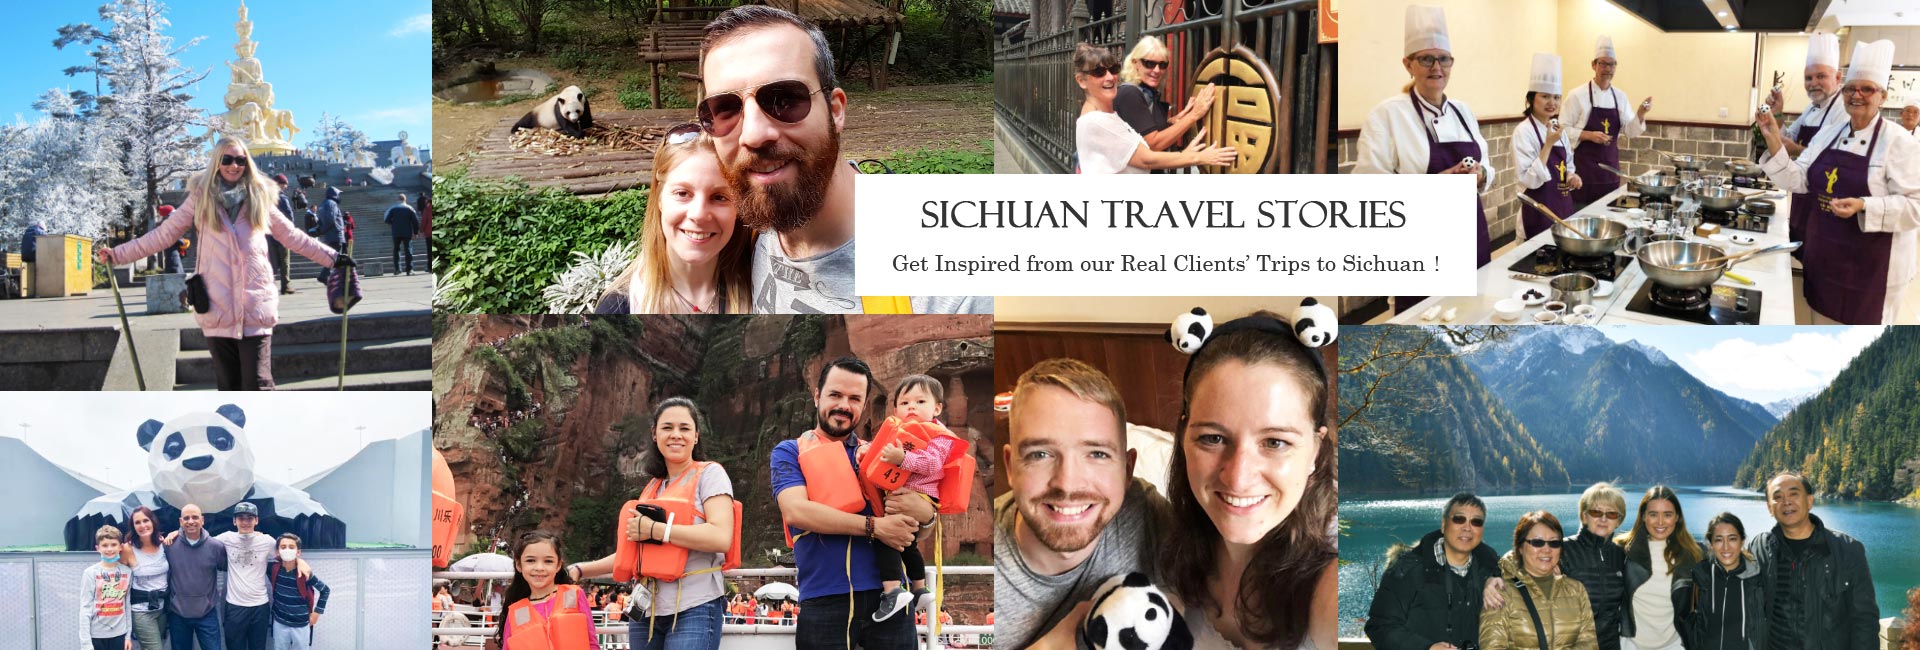 Sichuan Travel Stories